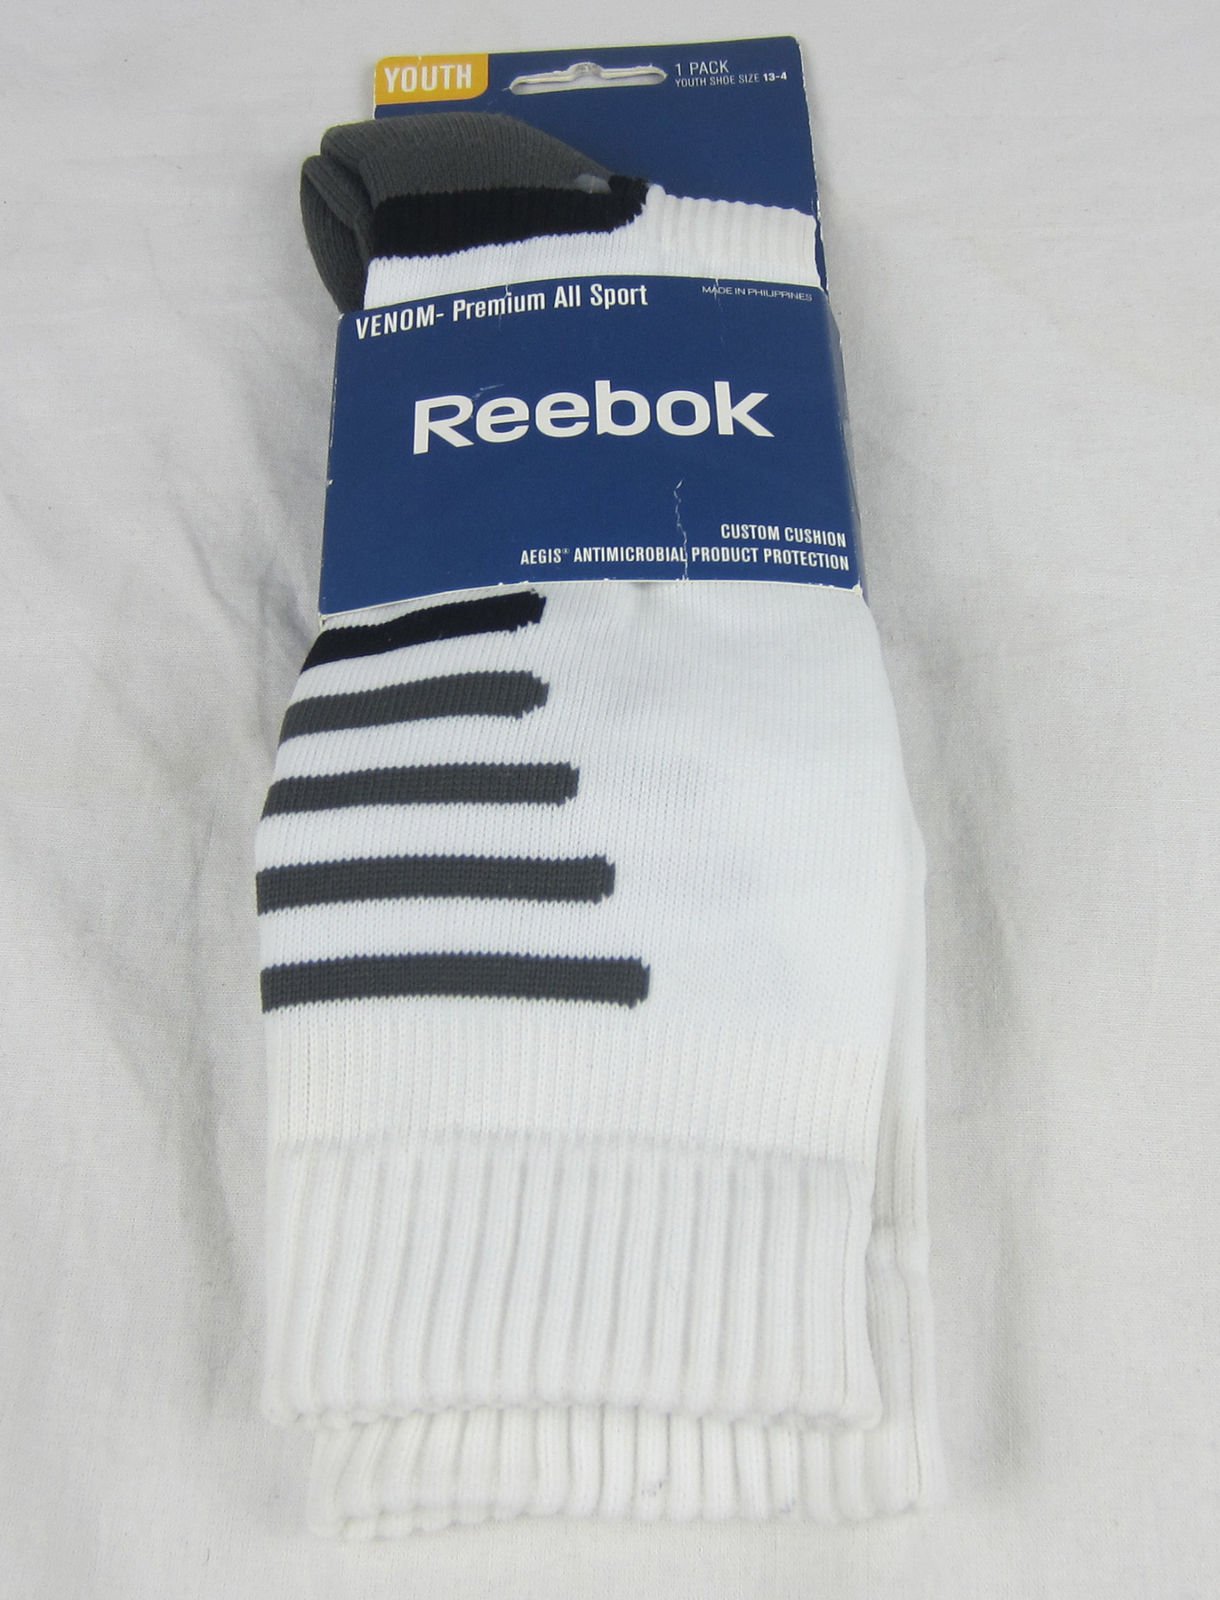 reebok youth socks